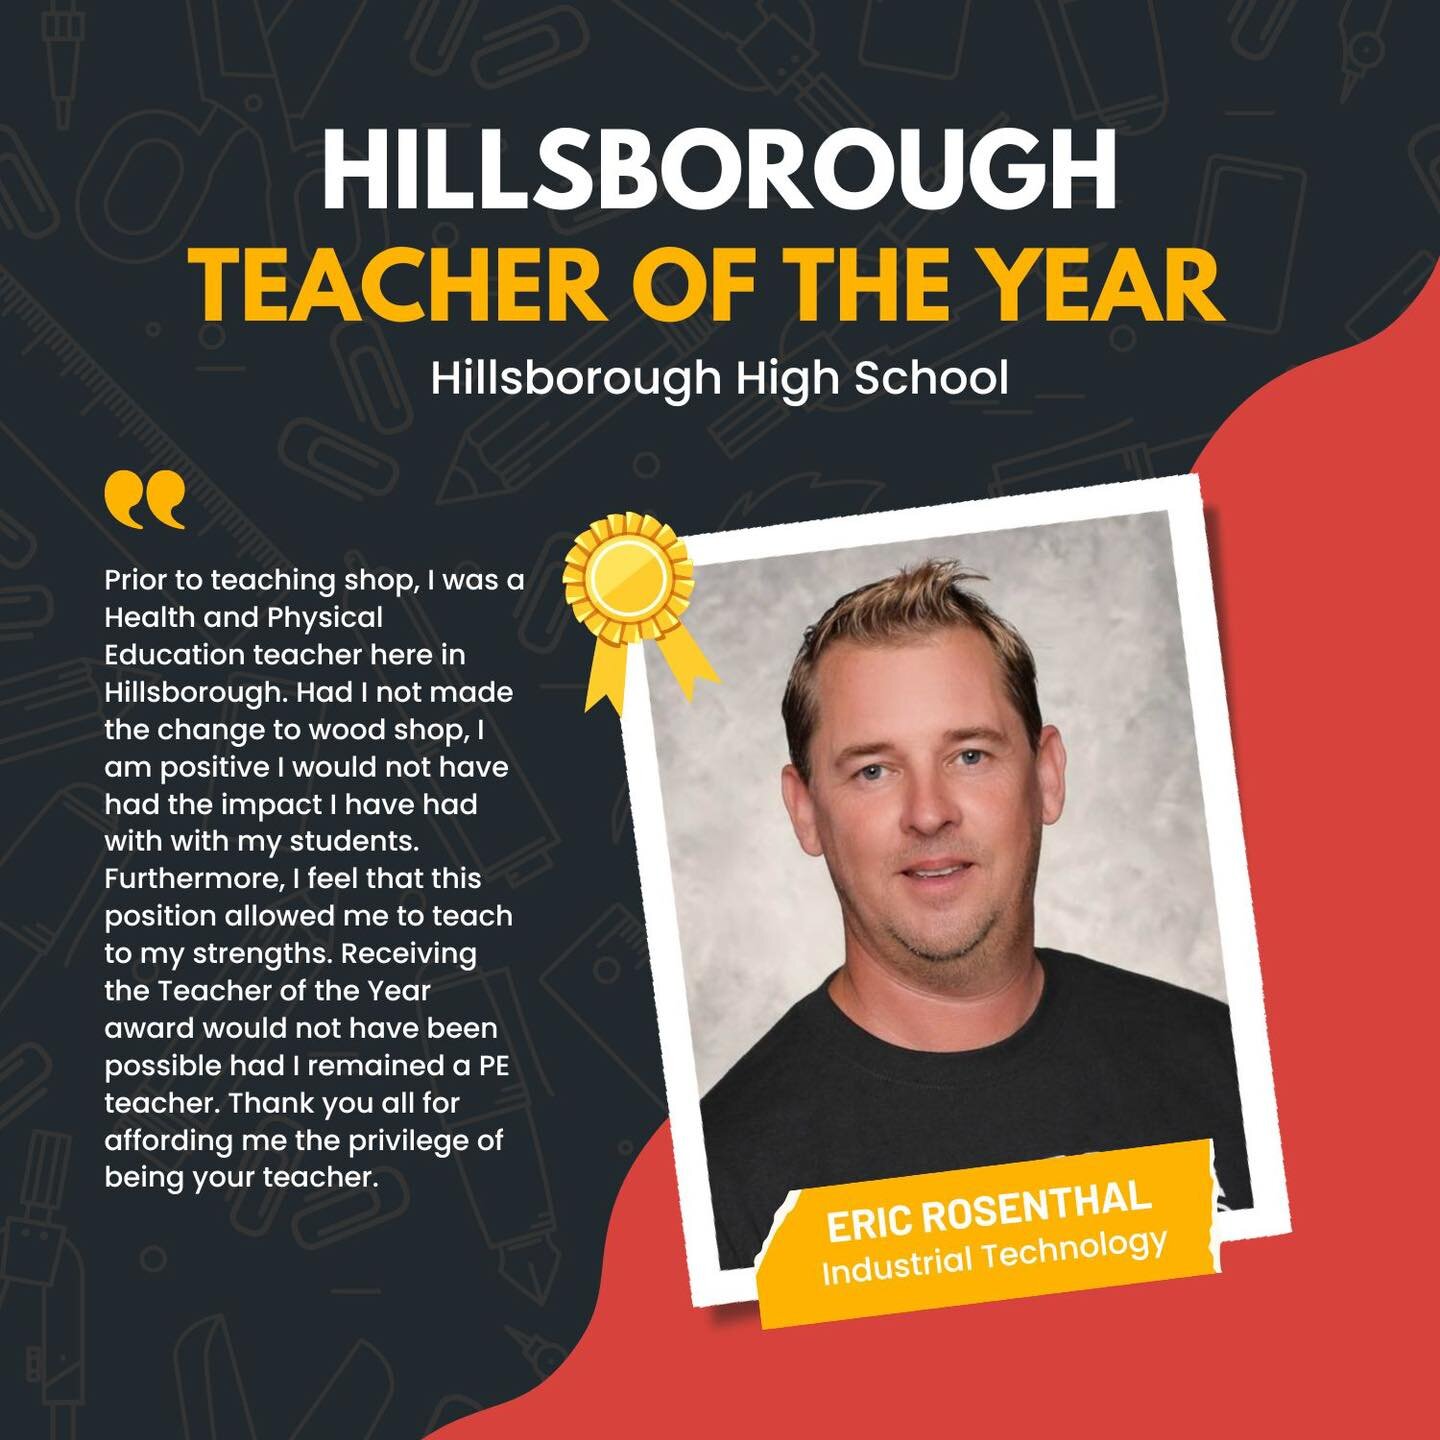 Congratulations to Eric Rosenthal, Hillsborough High School Teacher of the Year!